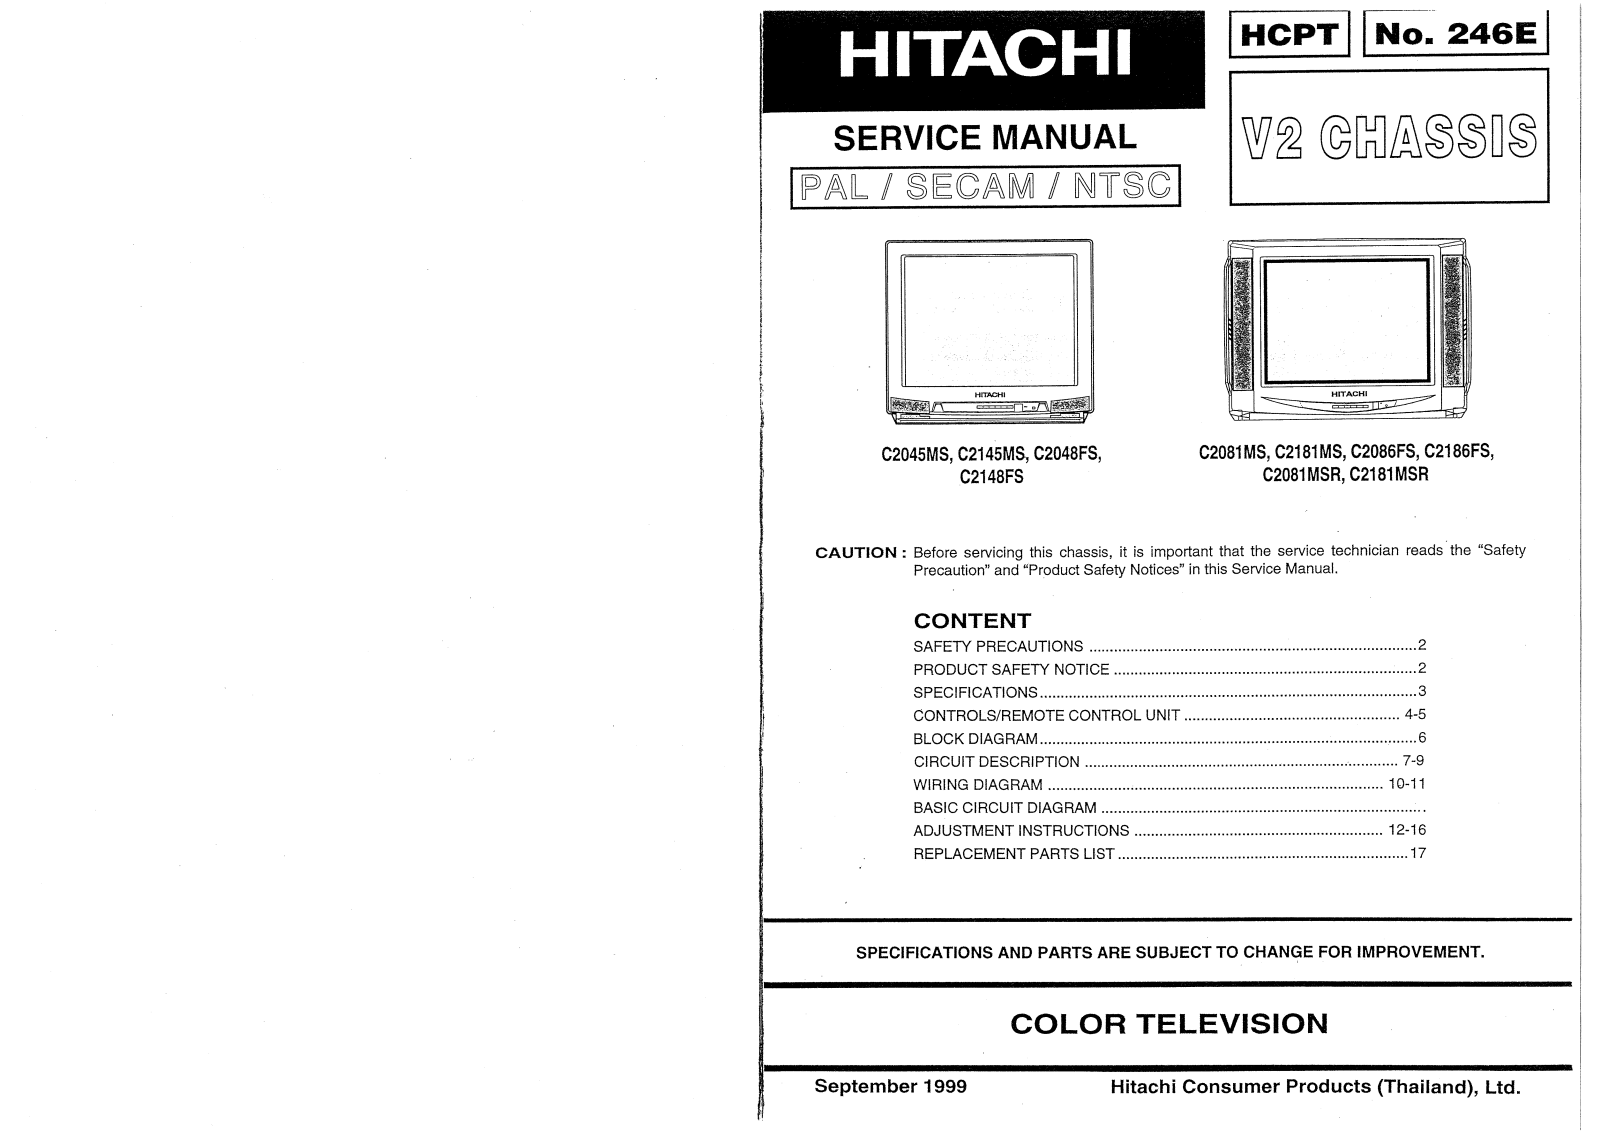 HITACHI C2145MS, C2048FS, C2148FS, C2081MS Service Manual